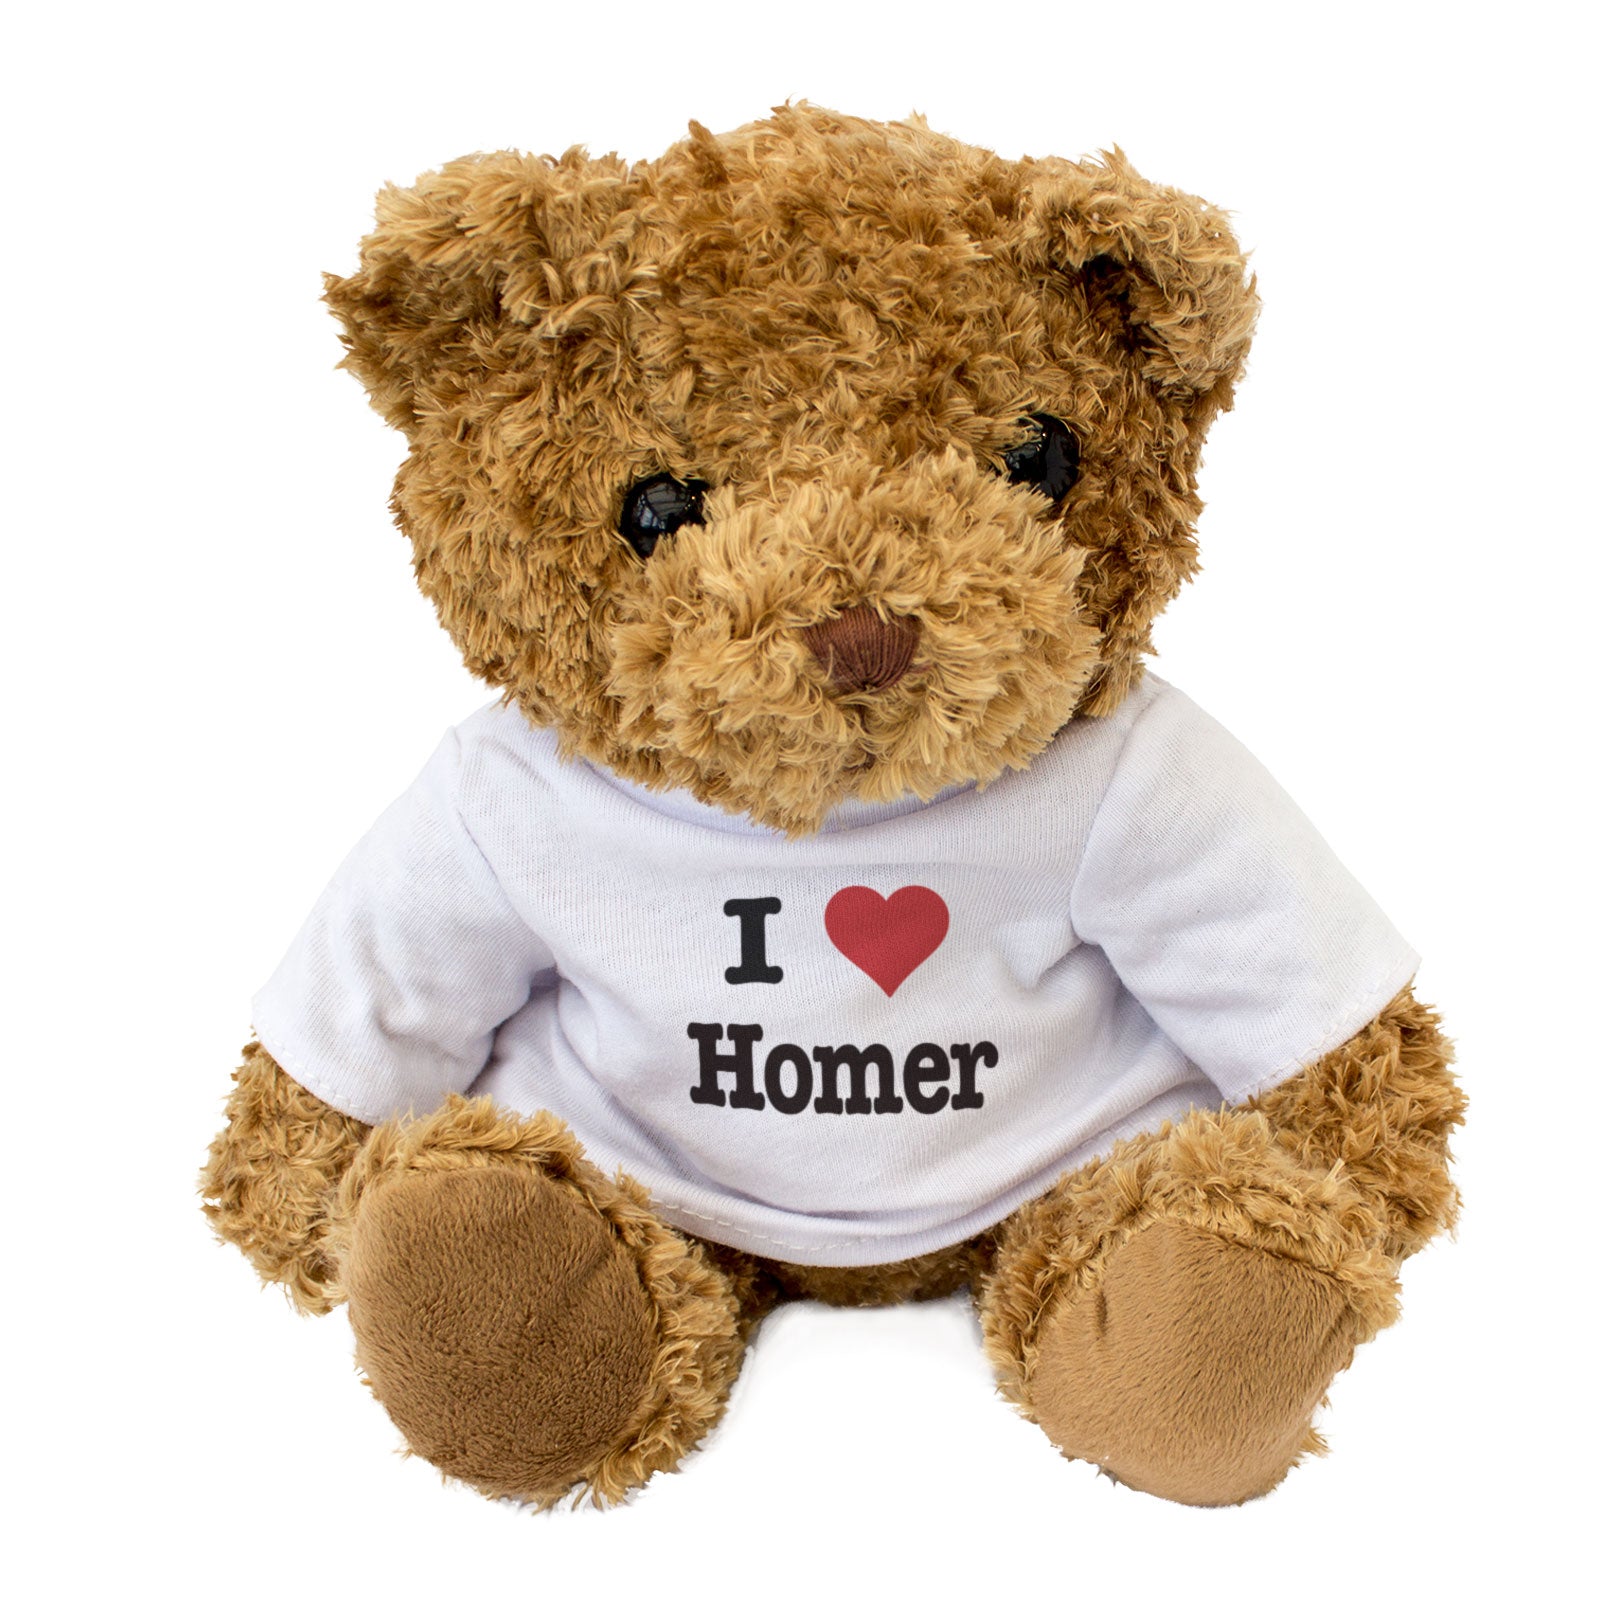 I Love Homer - Teddy Bear